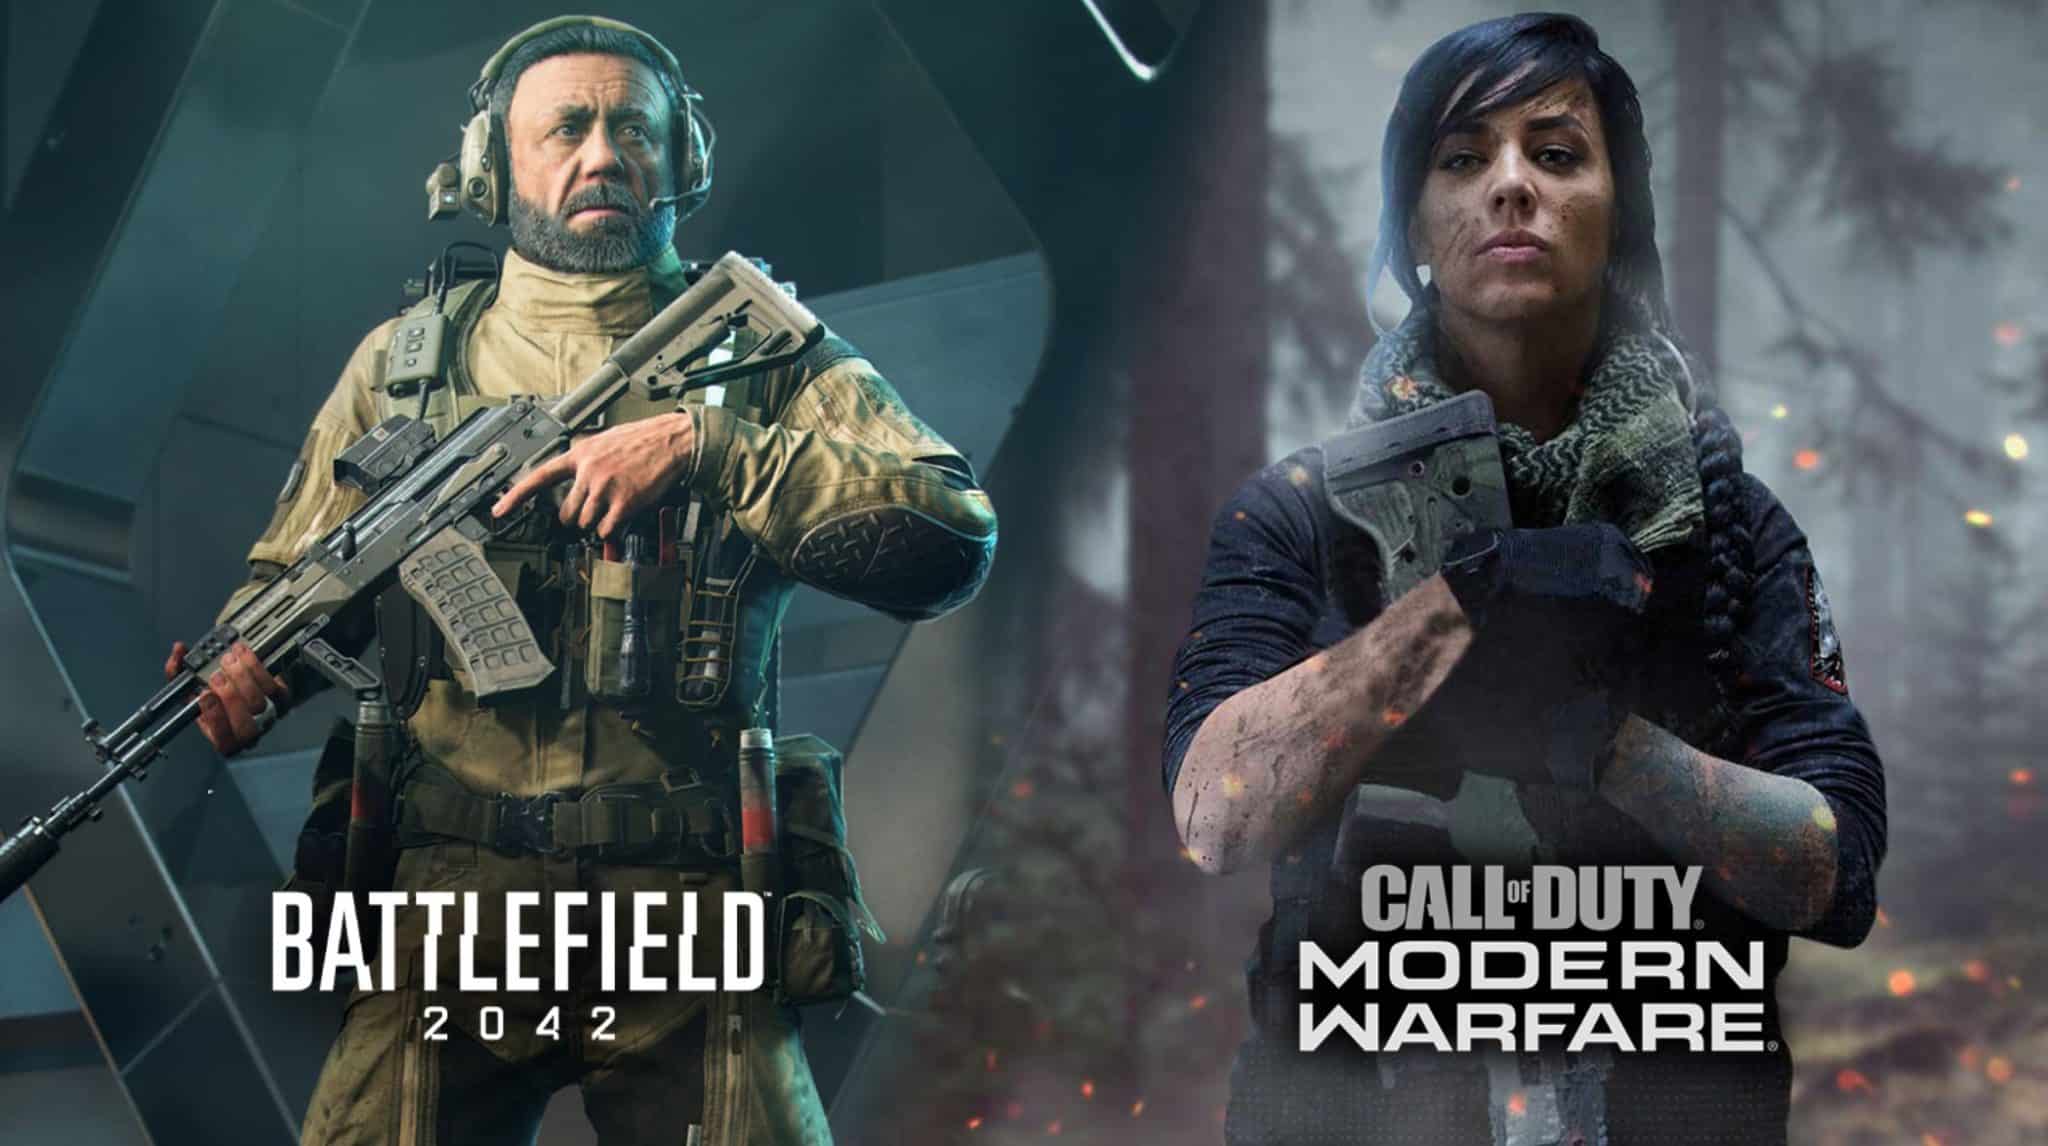 Battlefield 2042 character next to Modern Warfare operator